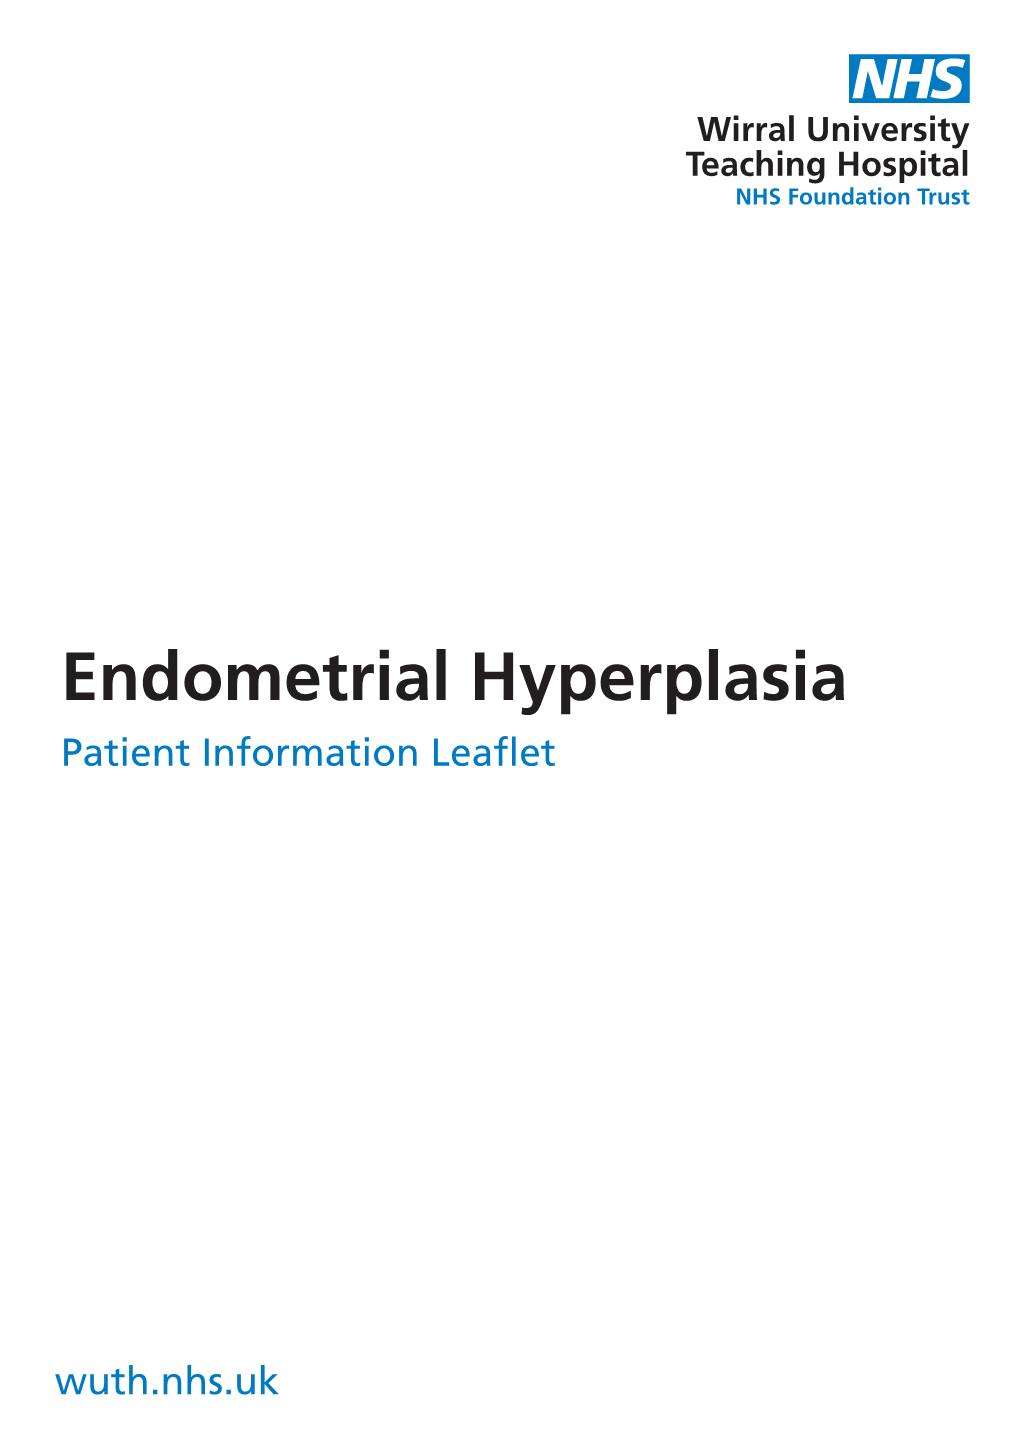 Endometrial Hyperplasia Patient Information Leaflet